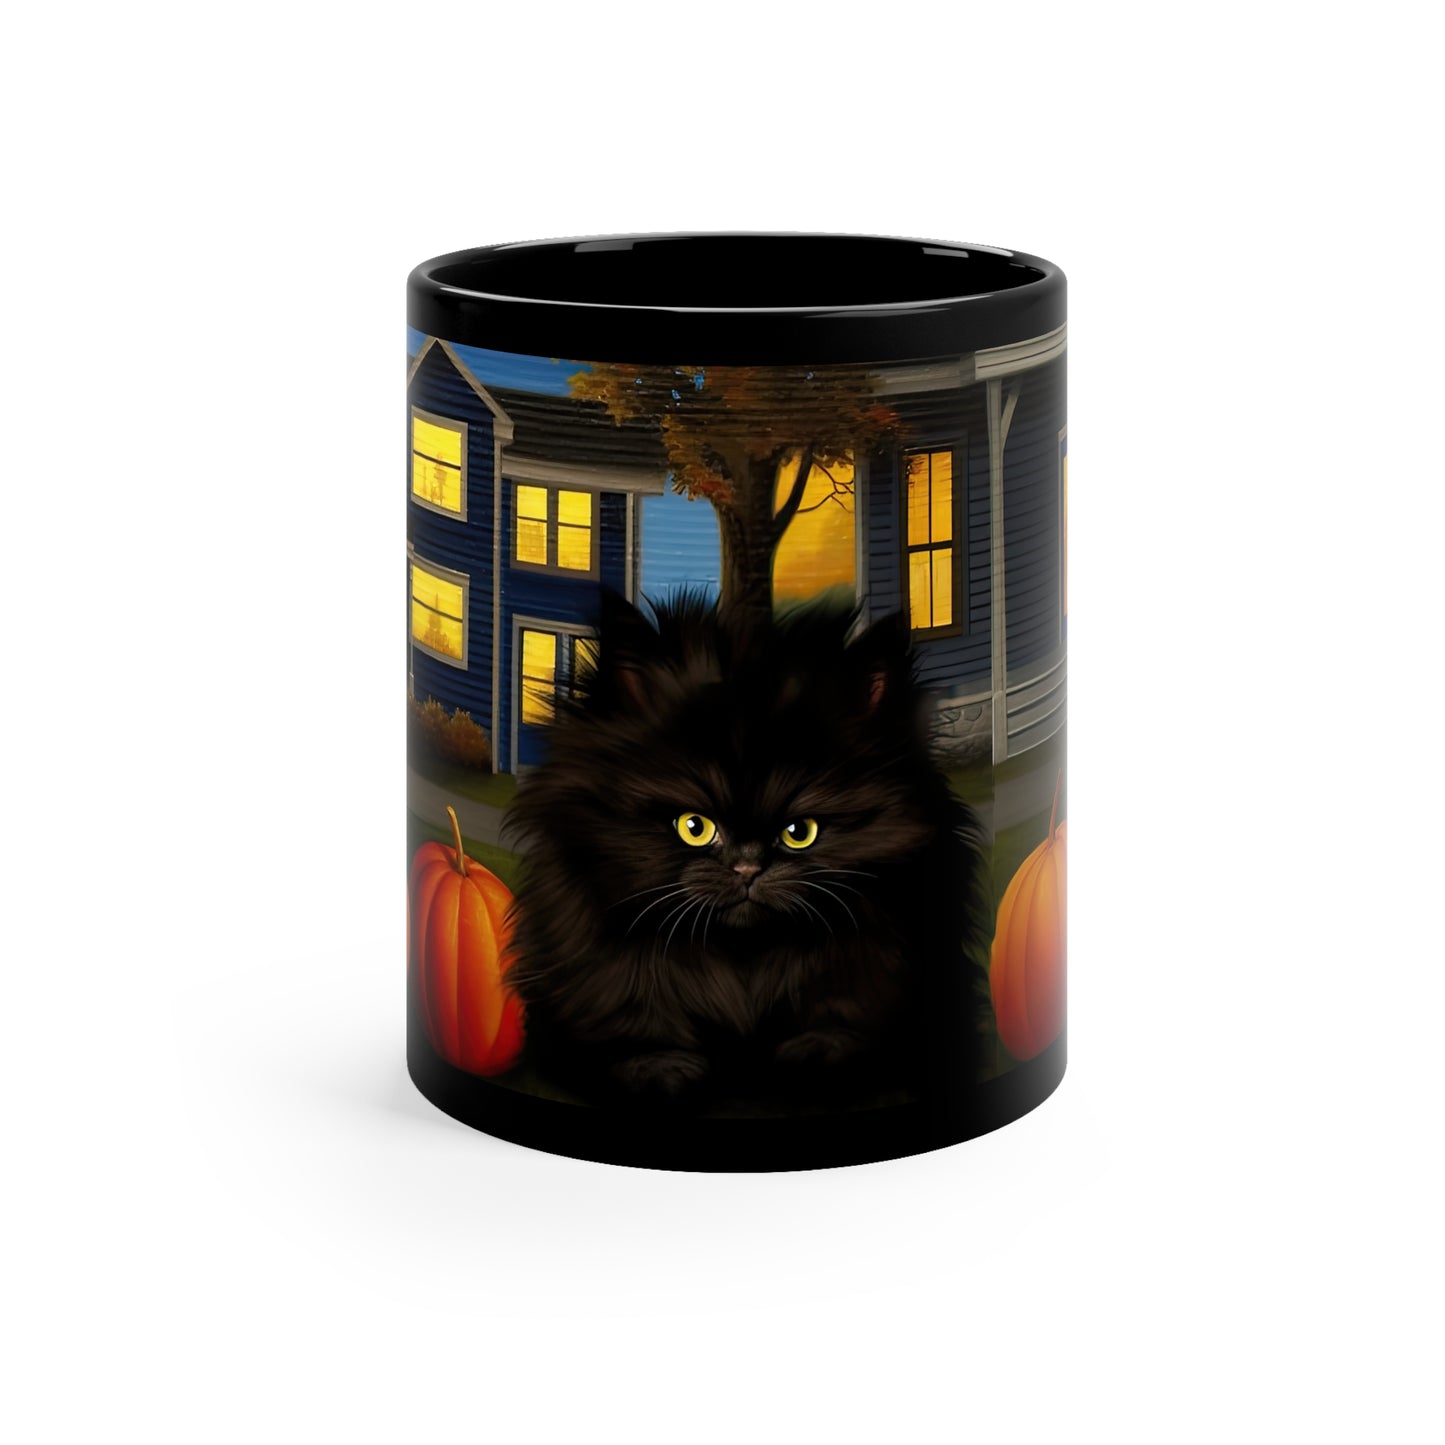 Spooky Halloween House, Fluffy Black Kitten With Pumpkins, Fall Time 11oz Black Mug